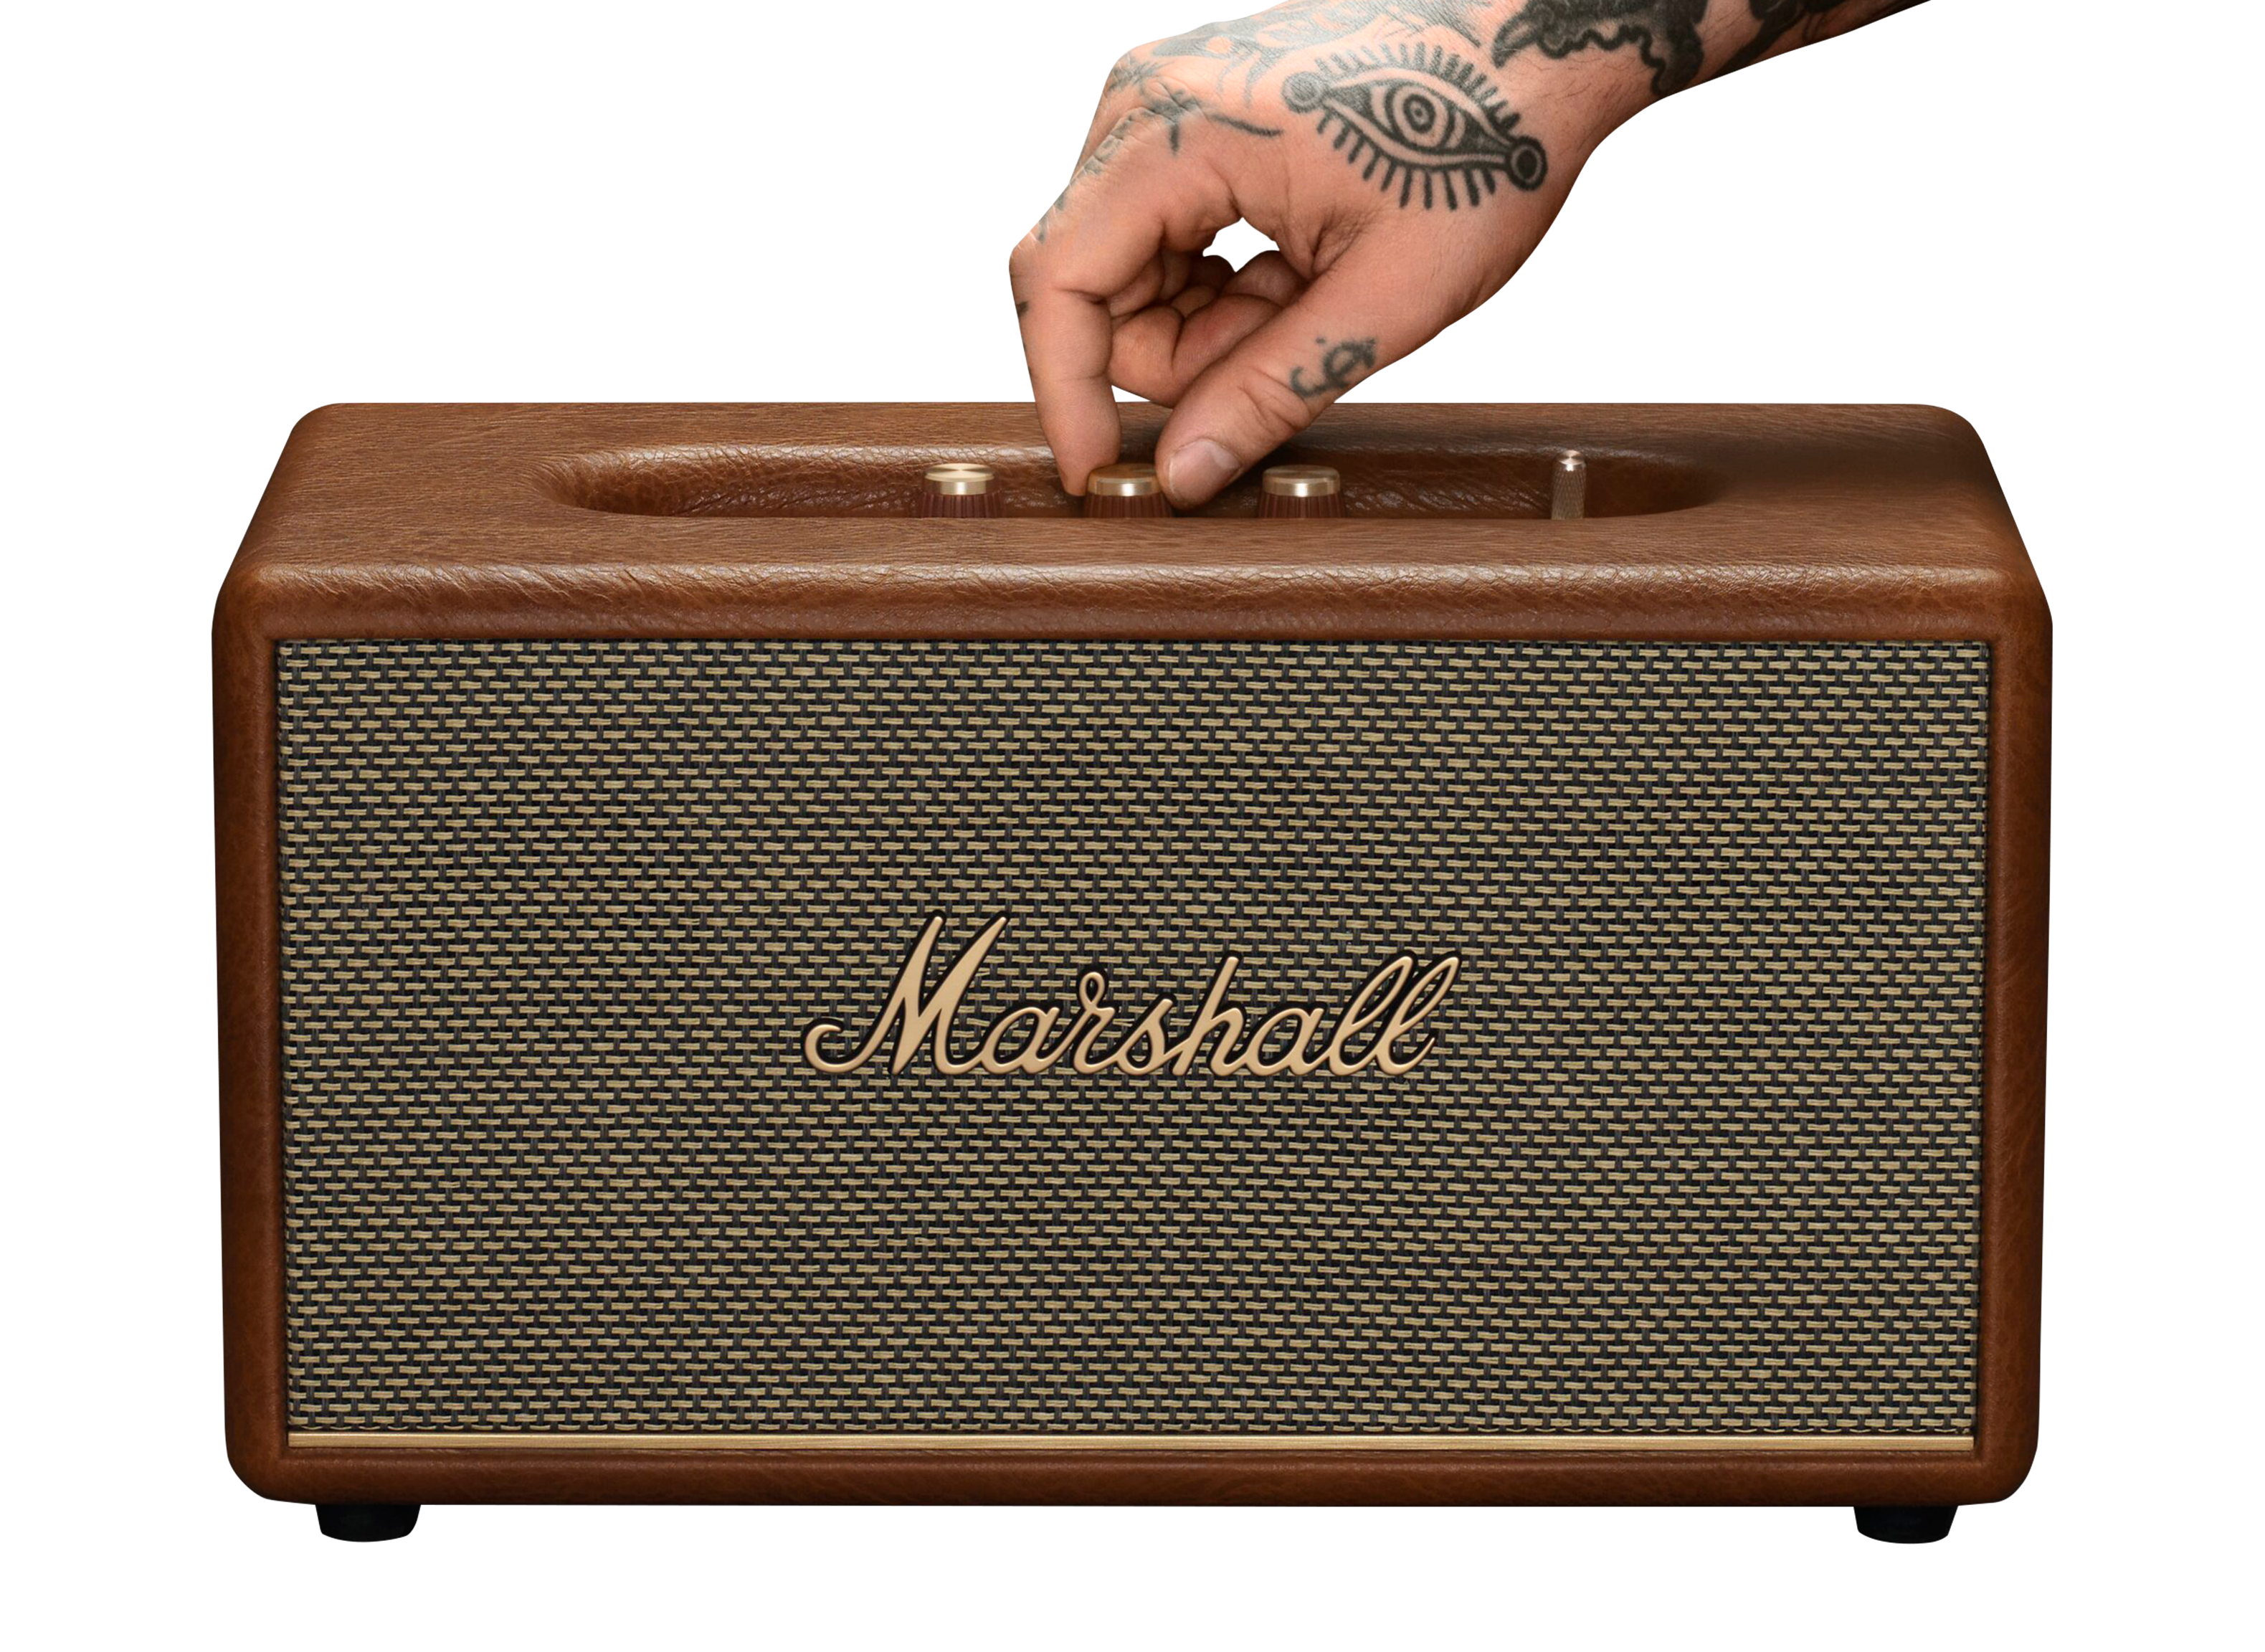 Marshall Stanmore III Bluetooth Speaker - Vivid Concepts